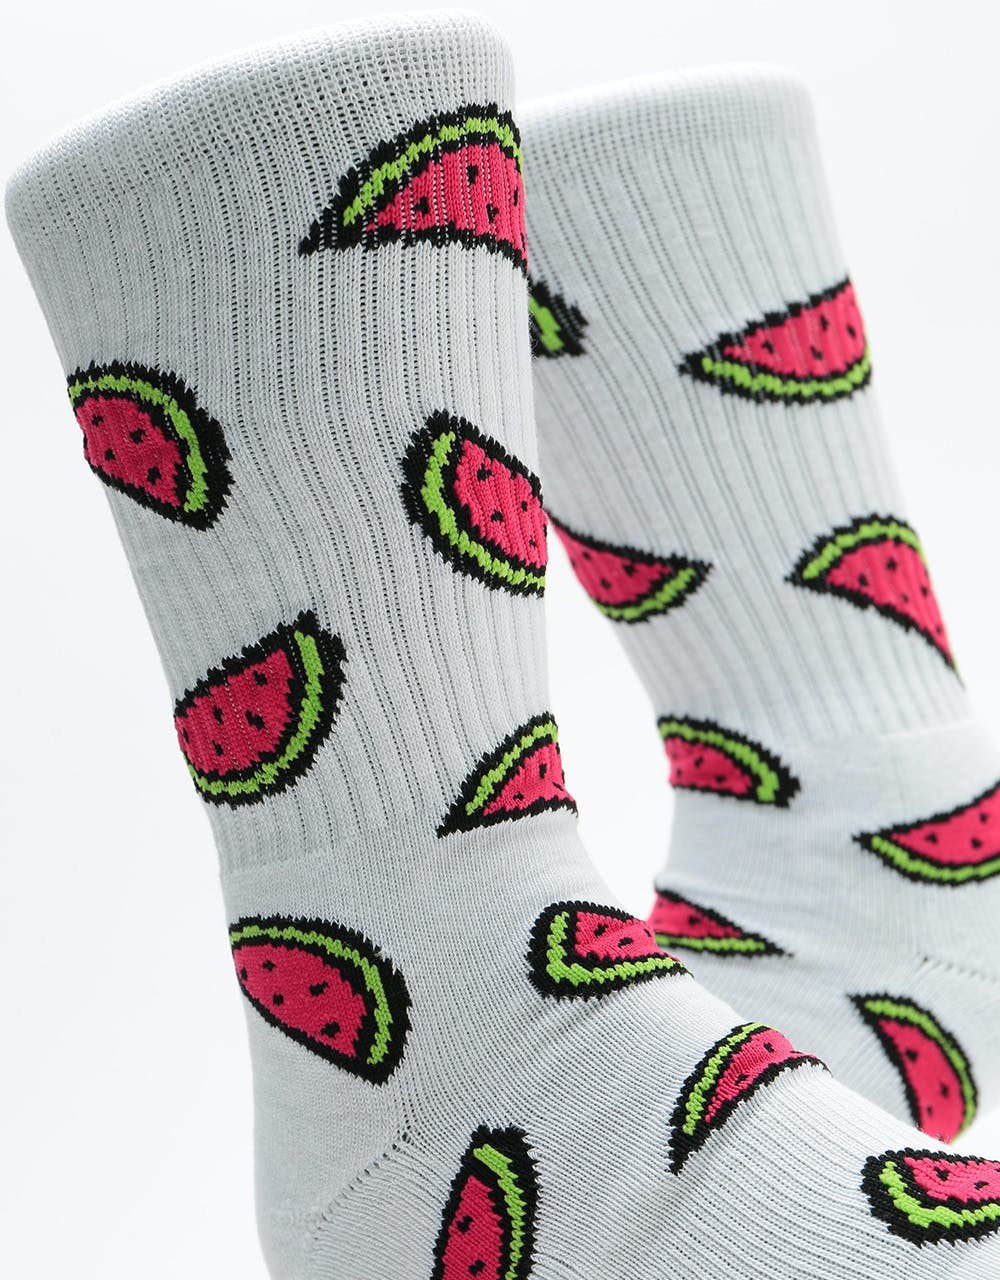 Route One Watermelon Socks - White